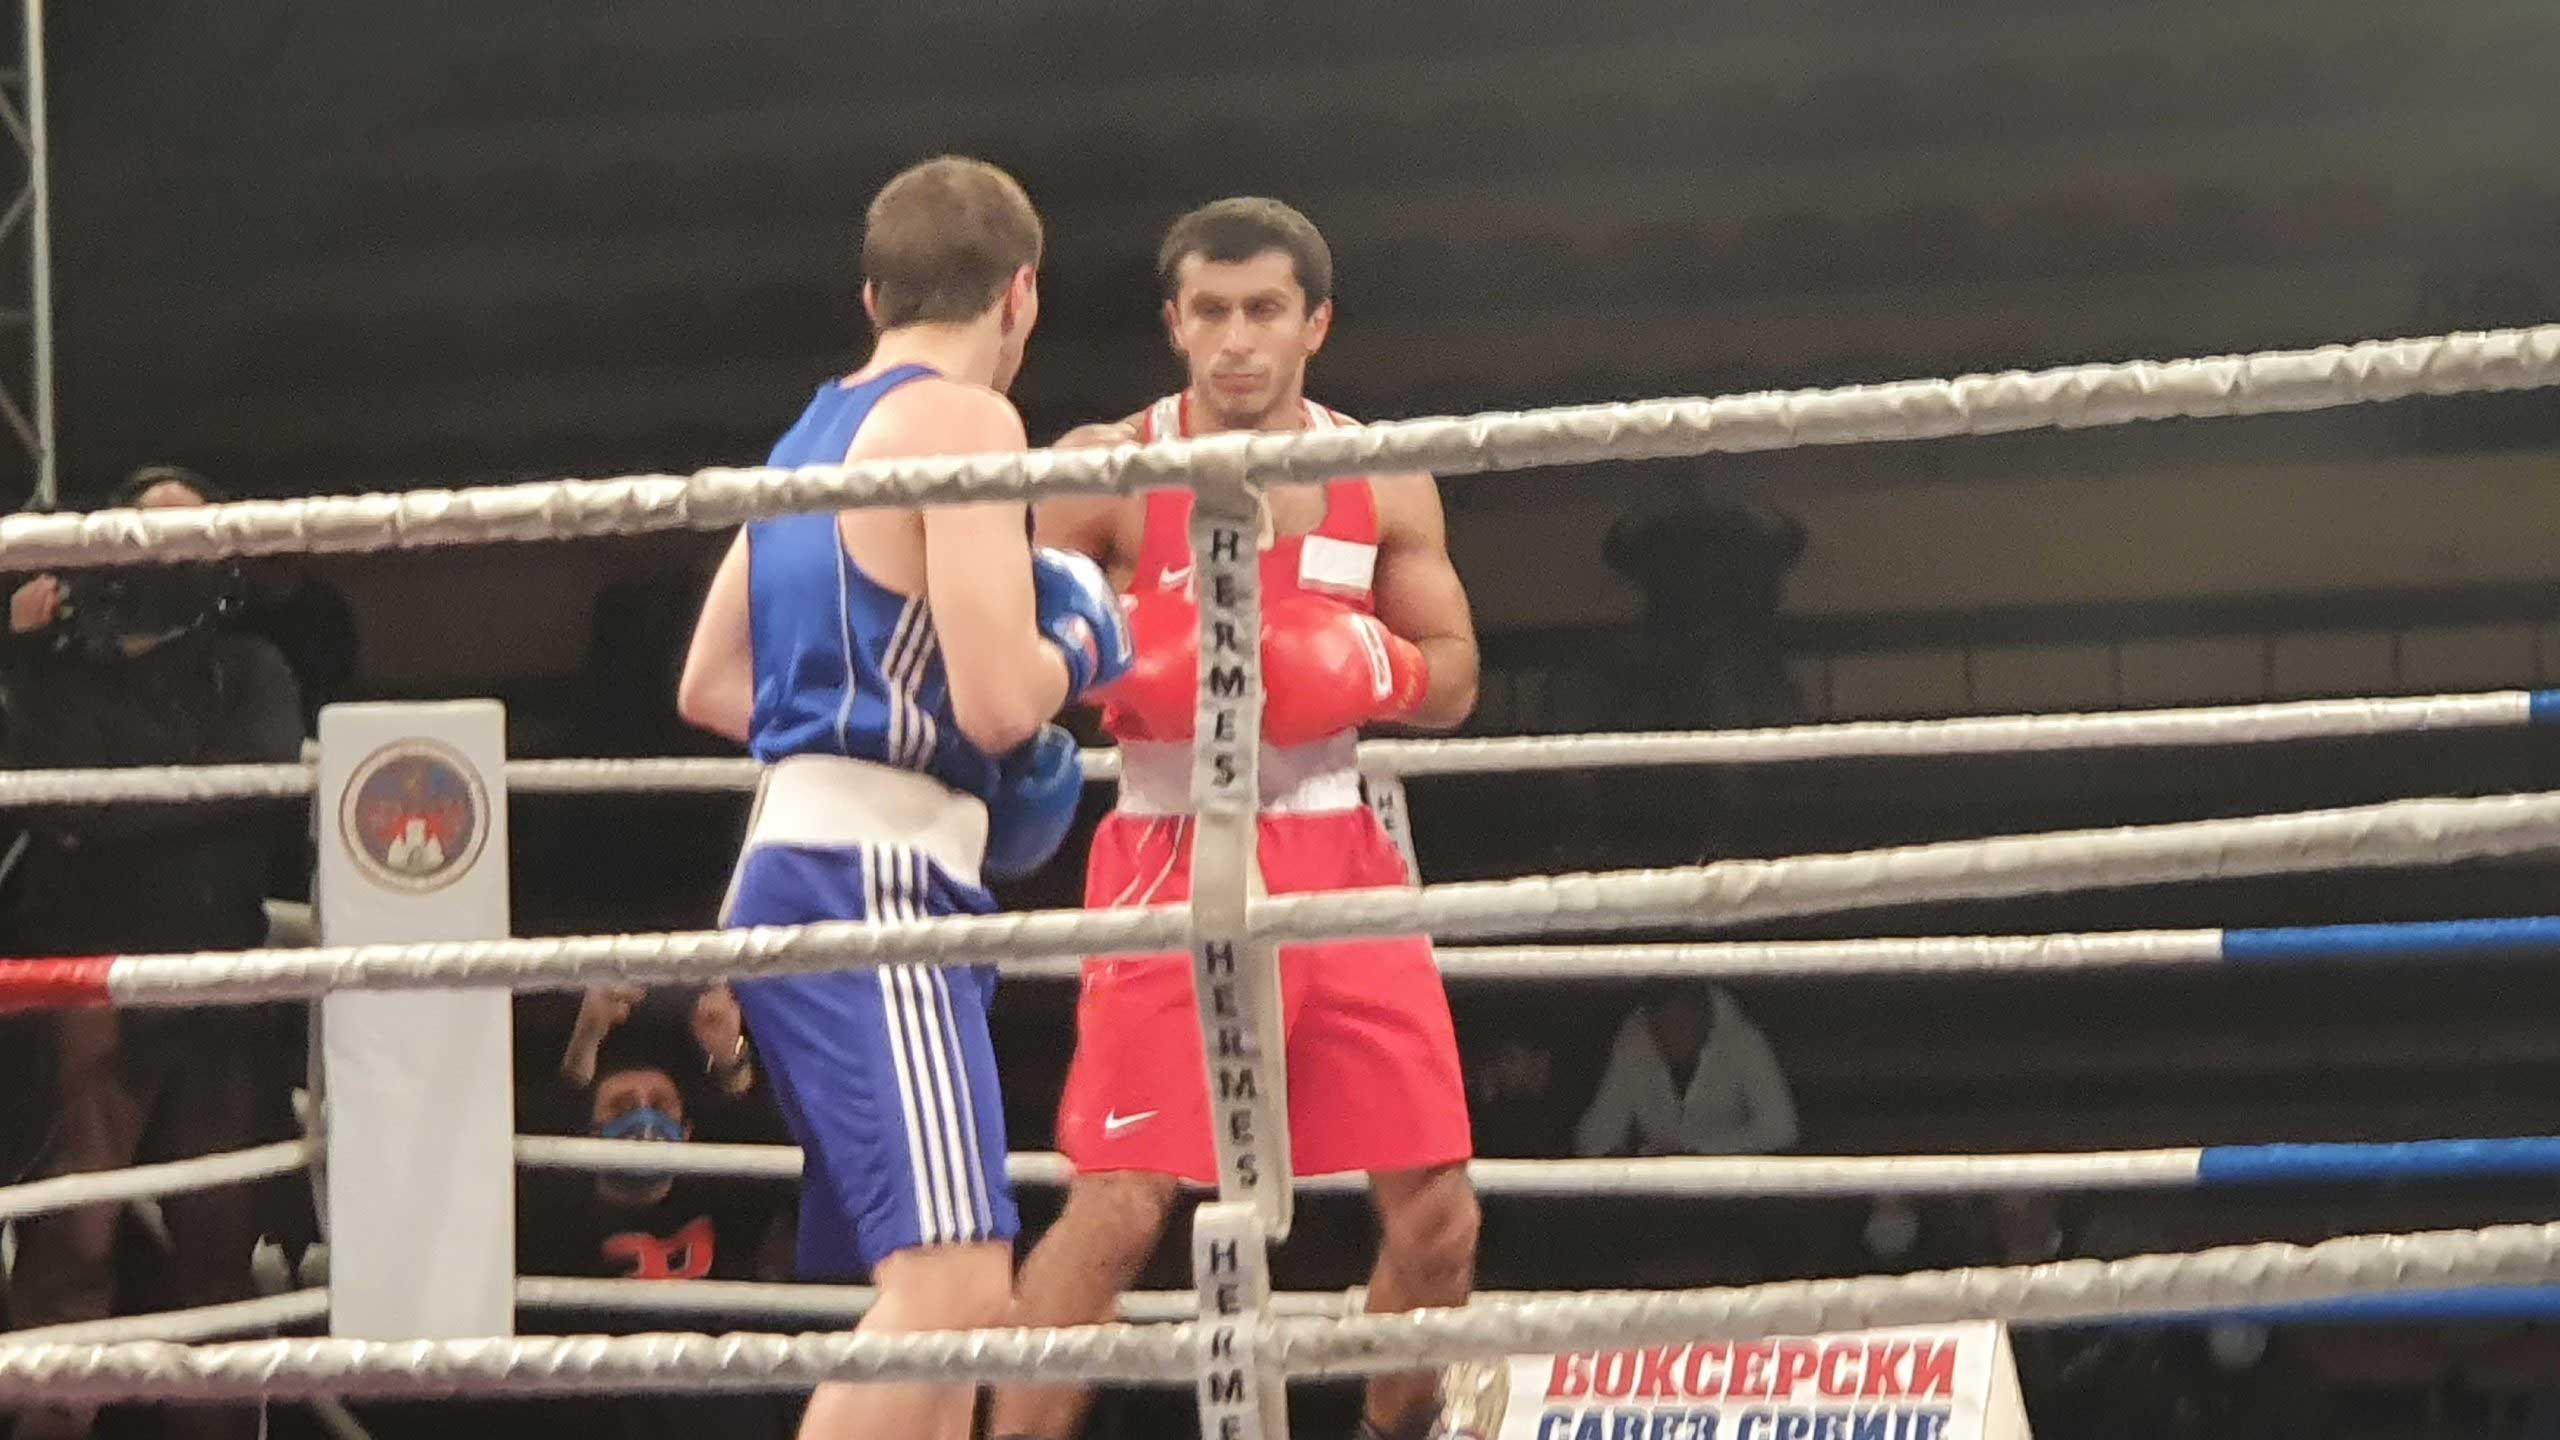 Vhahid Abasov, BC Radnicki boxing, Sports in Serbia, sports, boxing